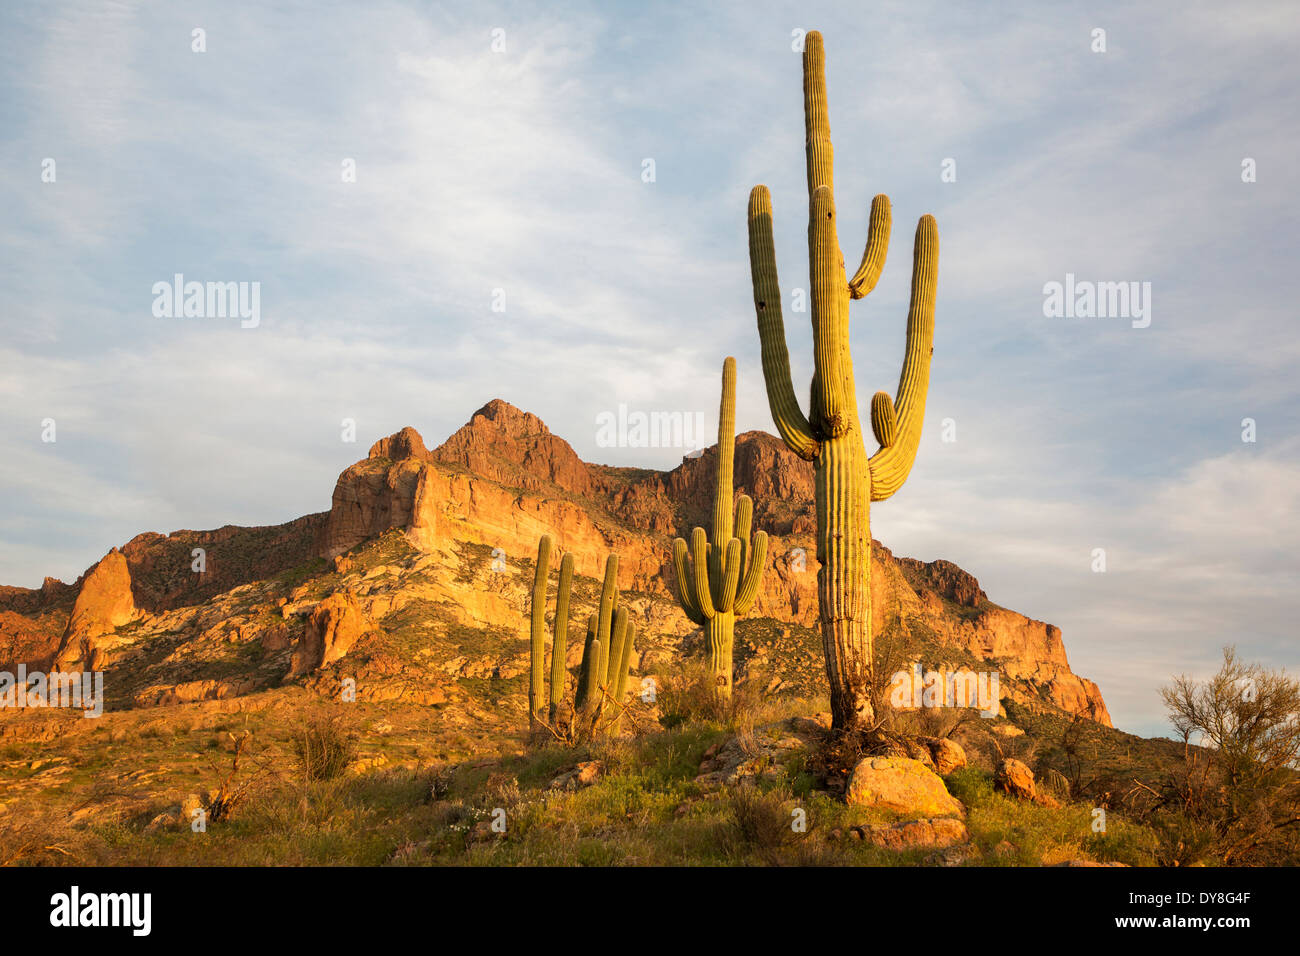 USA, Arizona, Tonto National Forest, Picketpost Berg mit Saguaro. Stockfoto